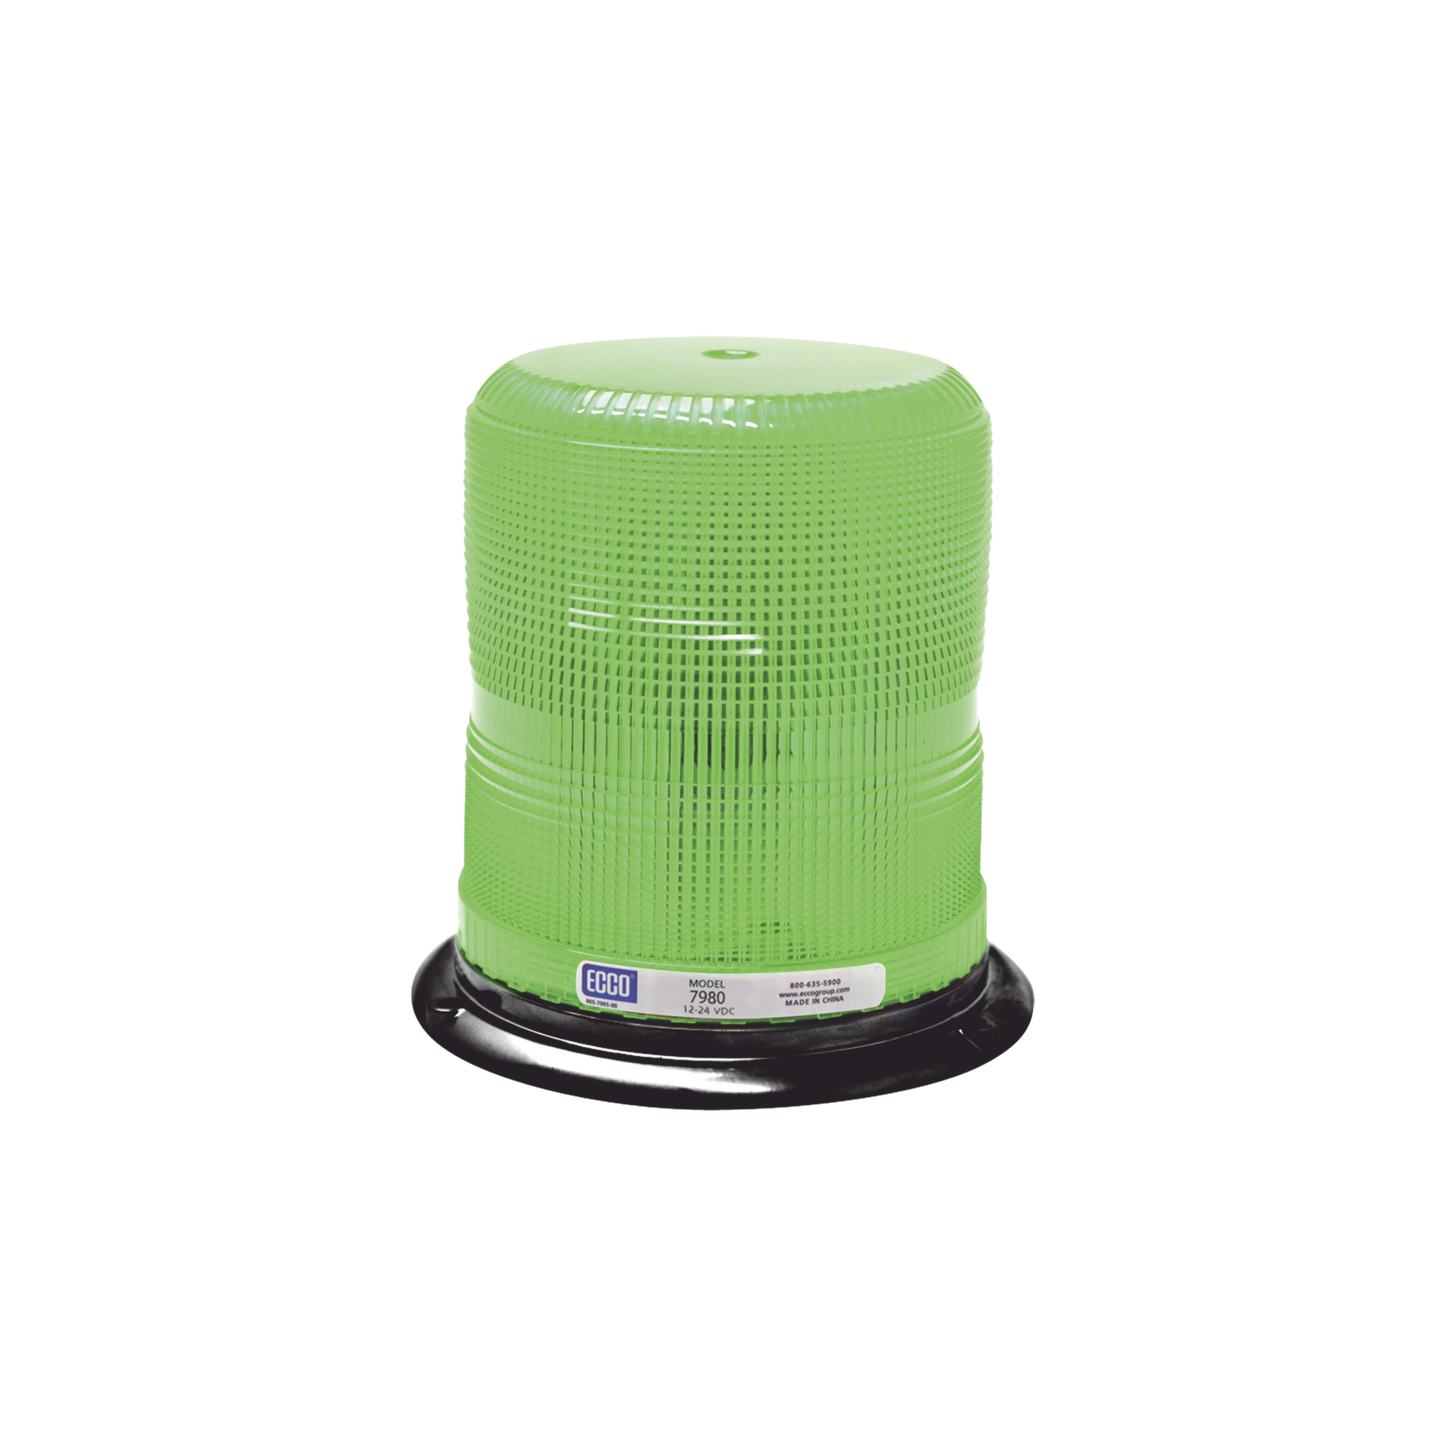 Baliza LED  Series X7980 Pulse II SAE Clase I, color verde